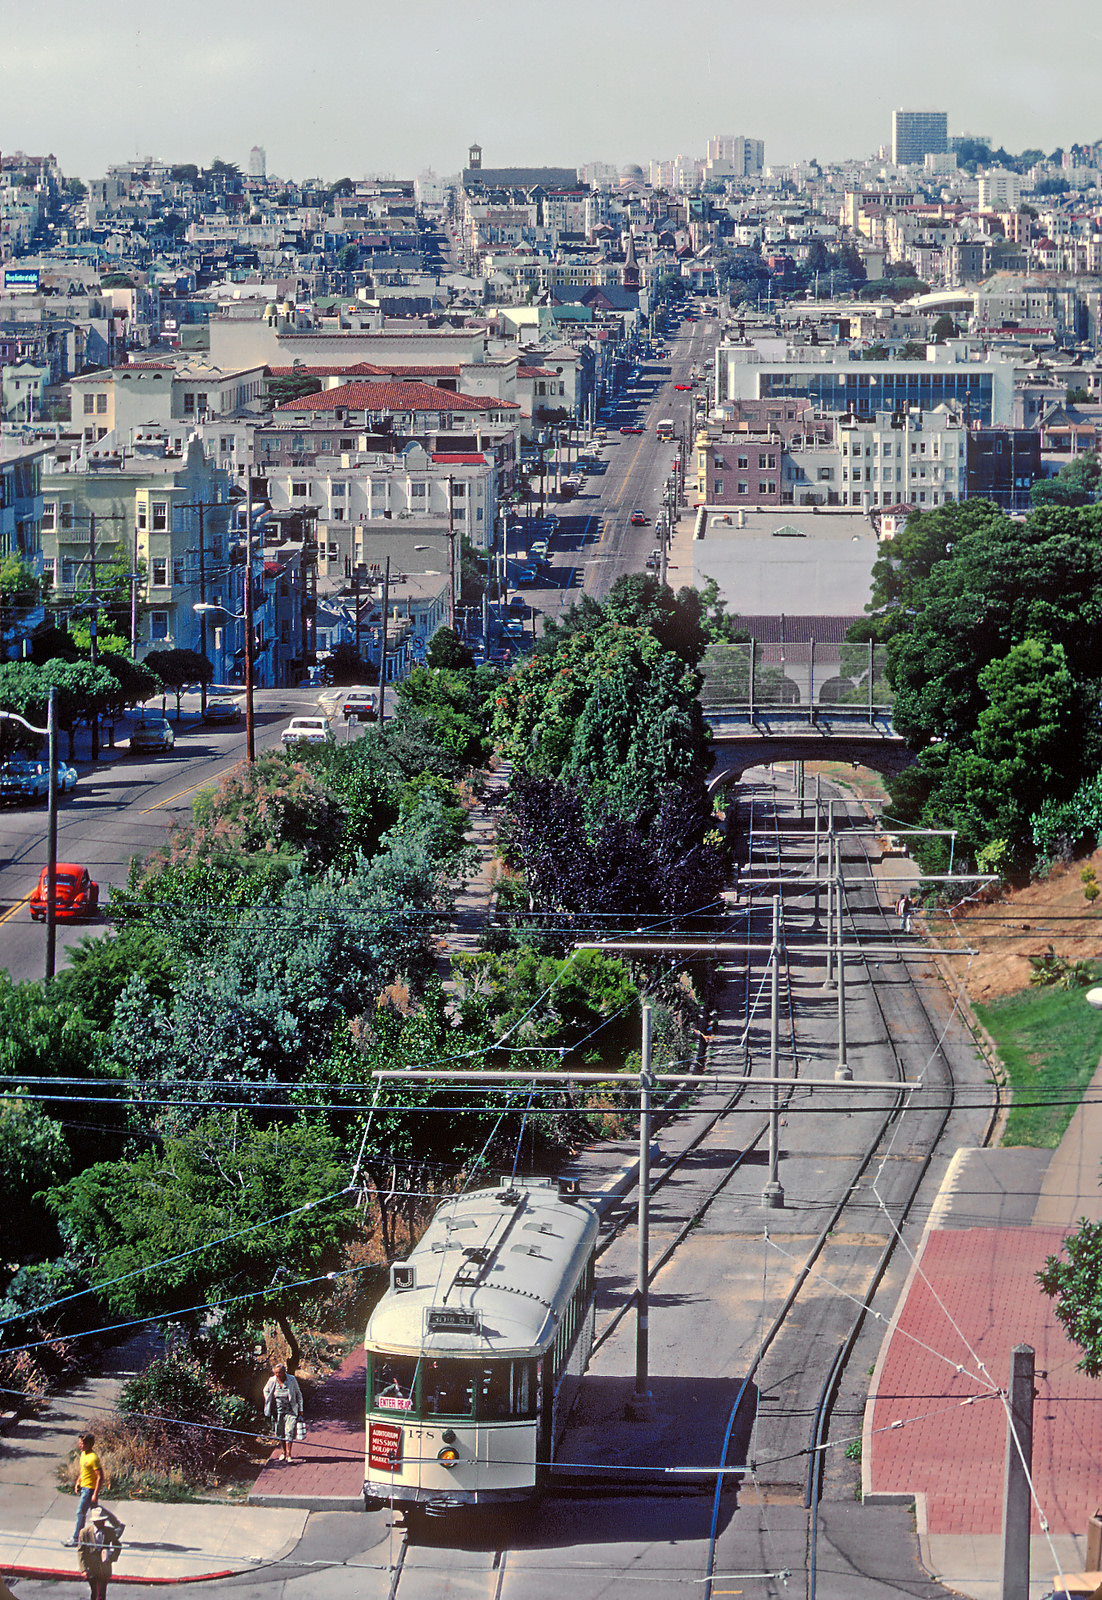 Суисун-Сити, Bethlehem Muni Type K № 178; Сан-Франциско, область залива — Старые фотографии и открытки; Сан-Франциско, область залива — Трамвайные линии и инфраструктура